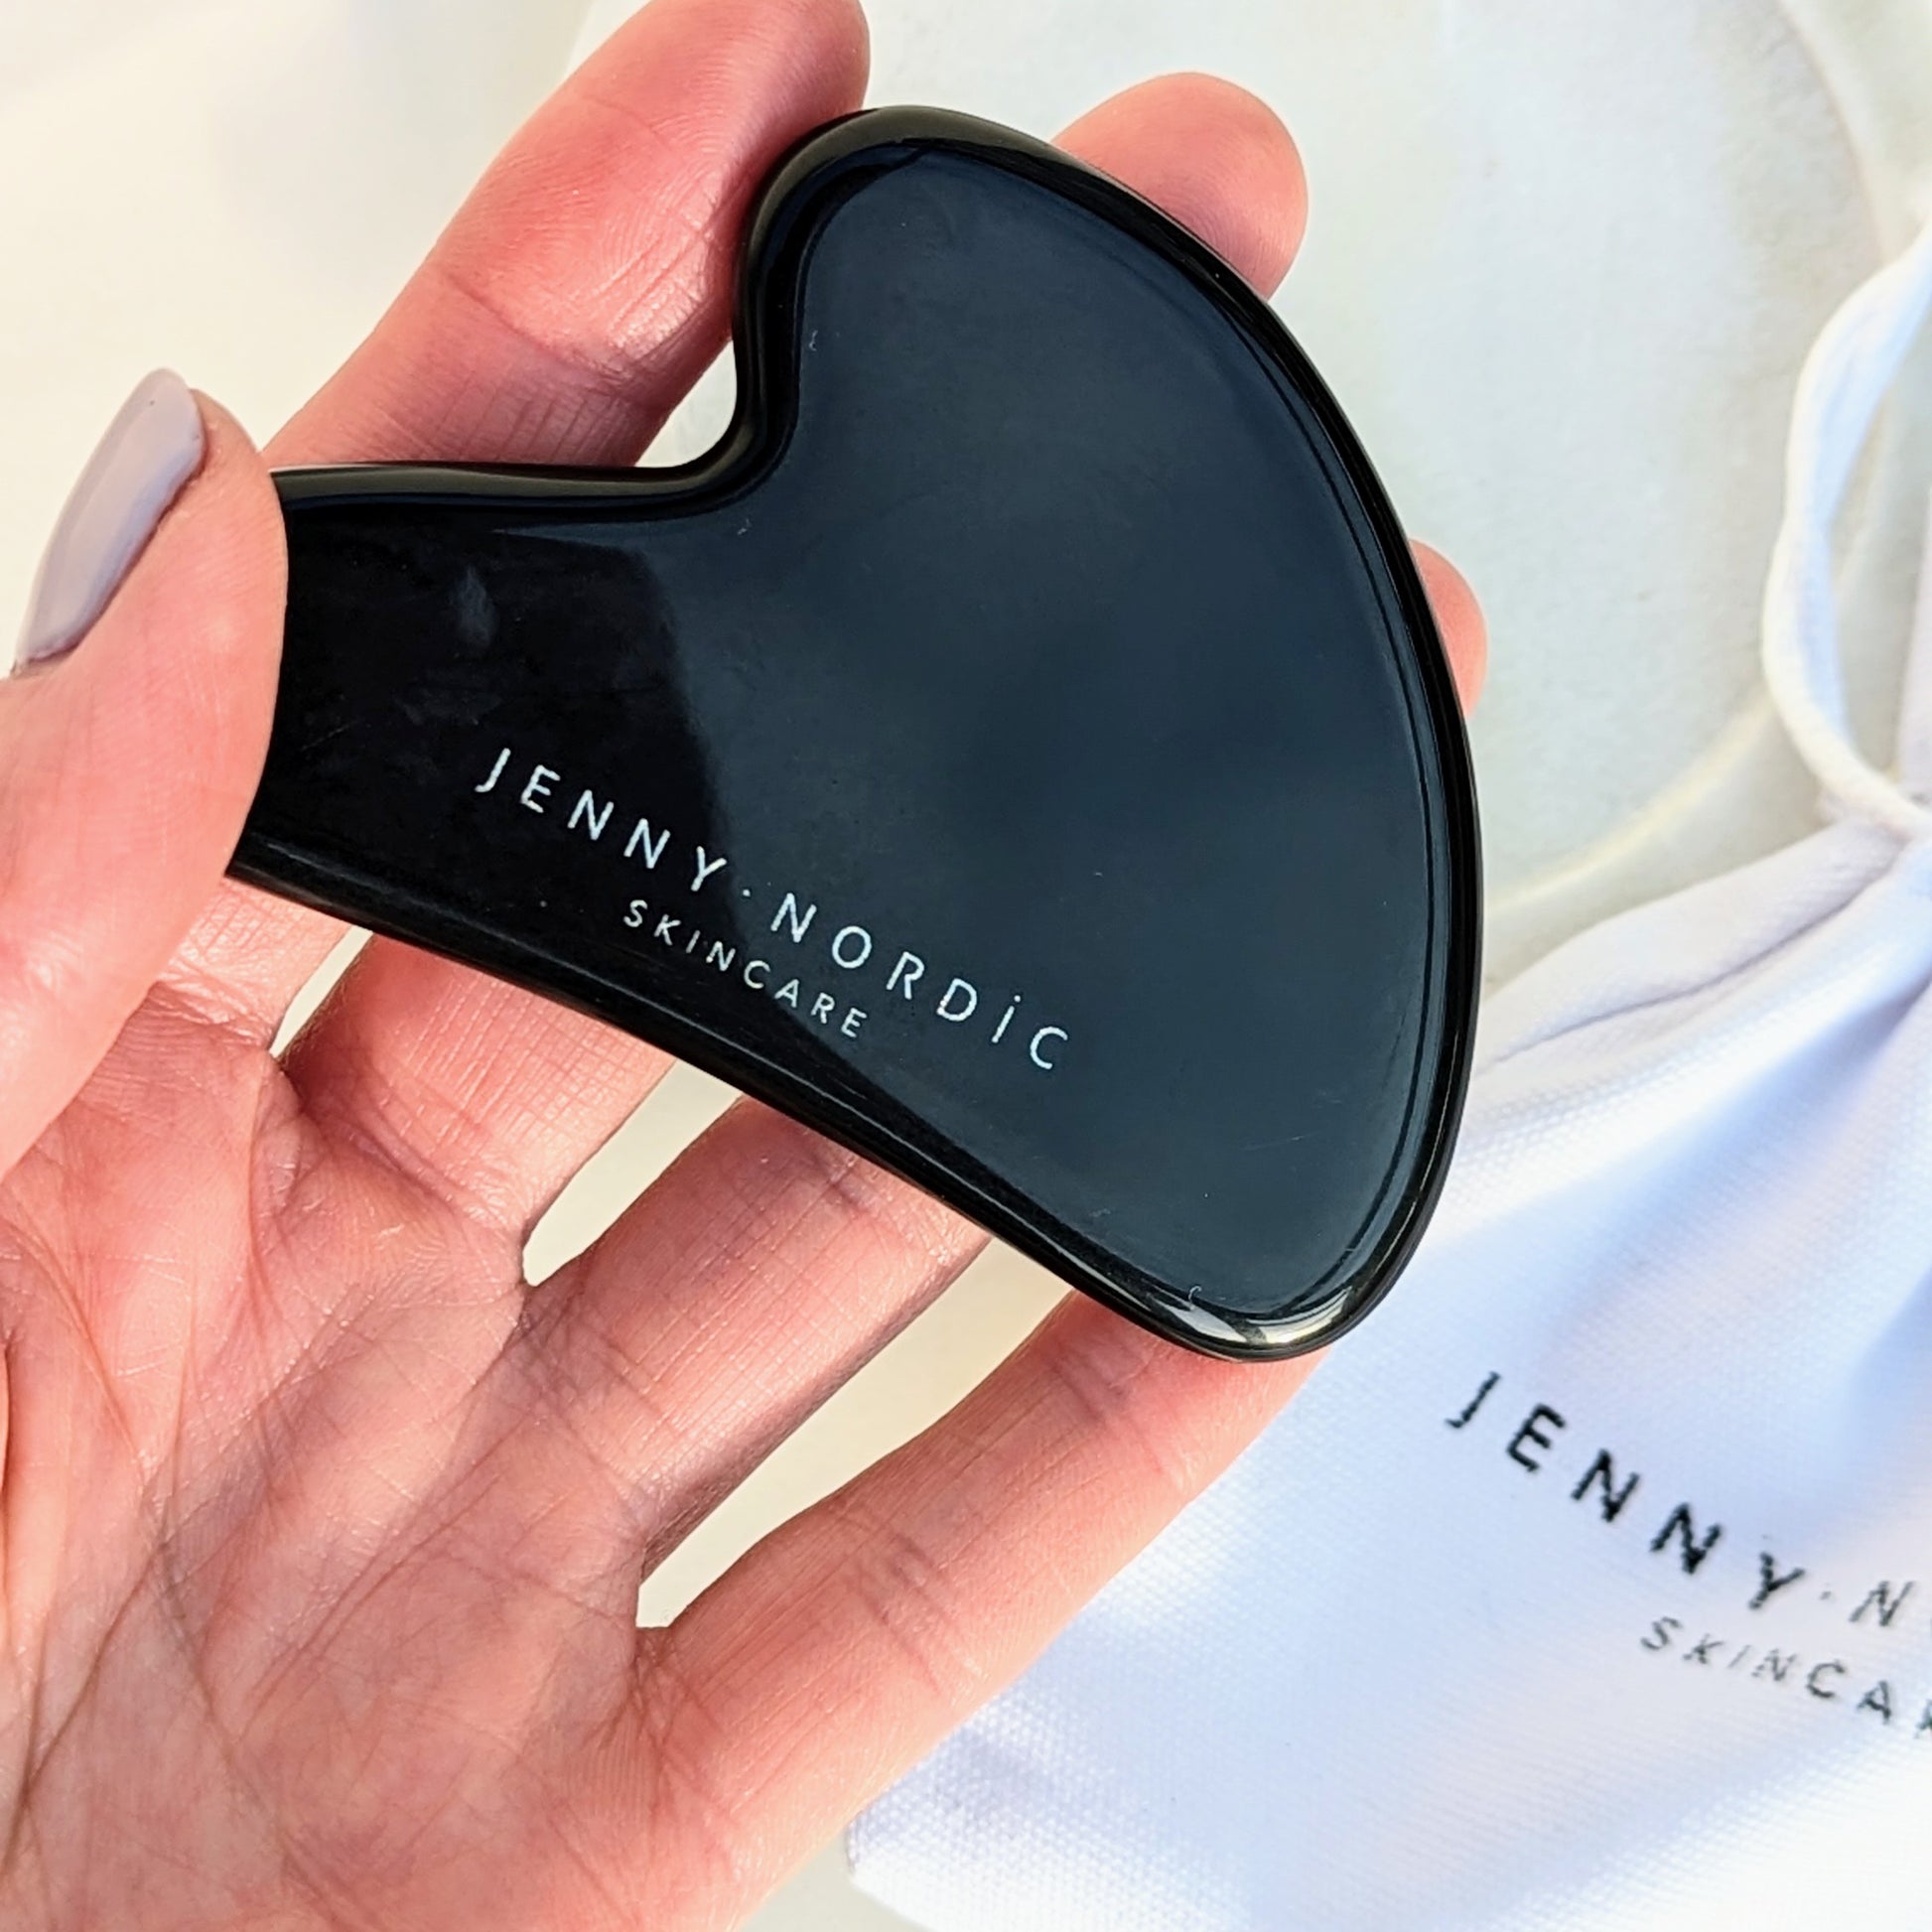 Jenny Nordic Skincare | Black obsidian gua sha tool in hand